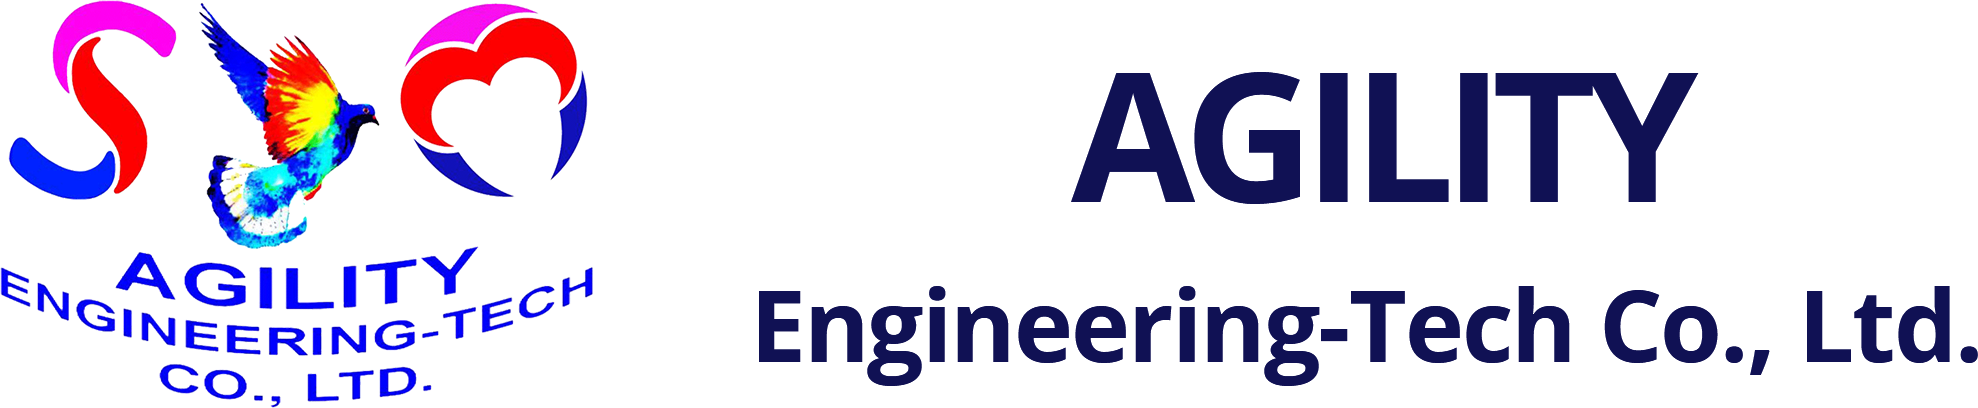 Agility Engineering Tech Co., Ltd.